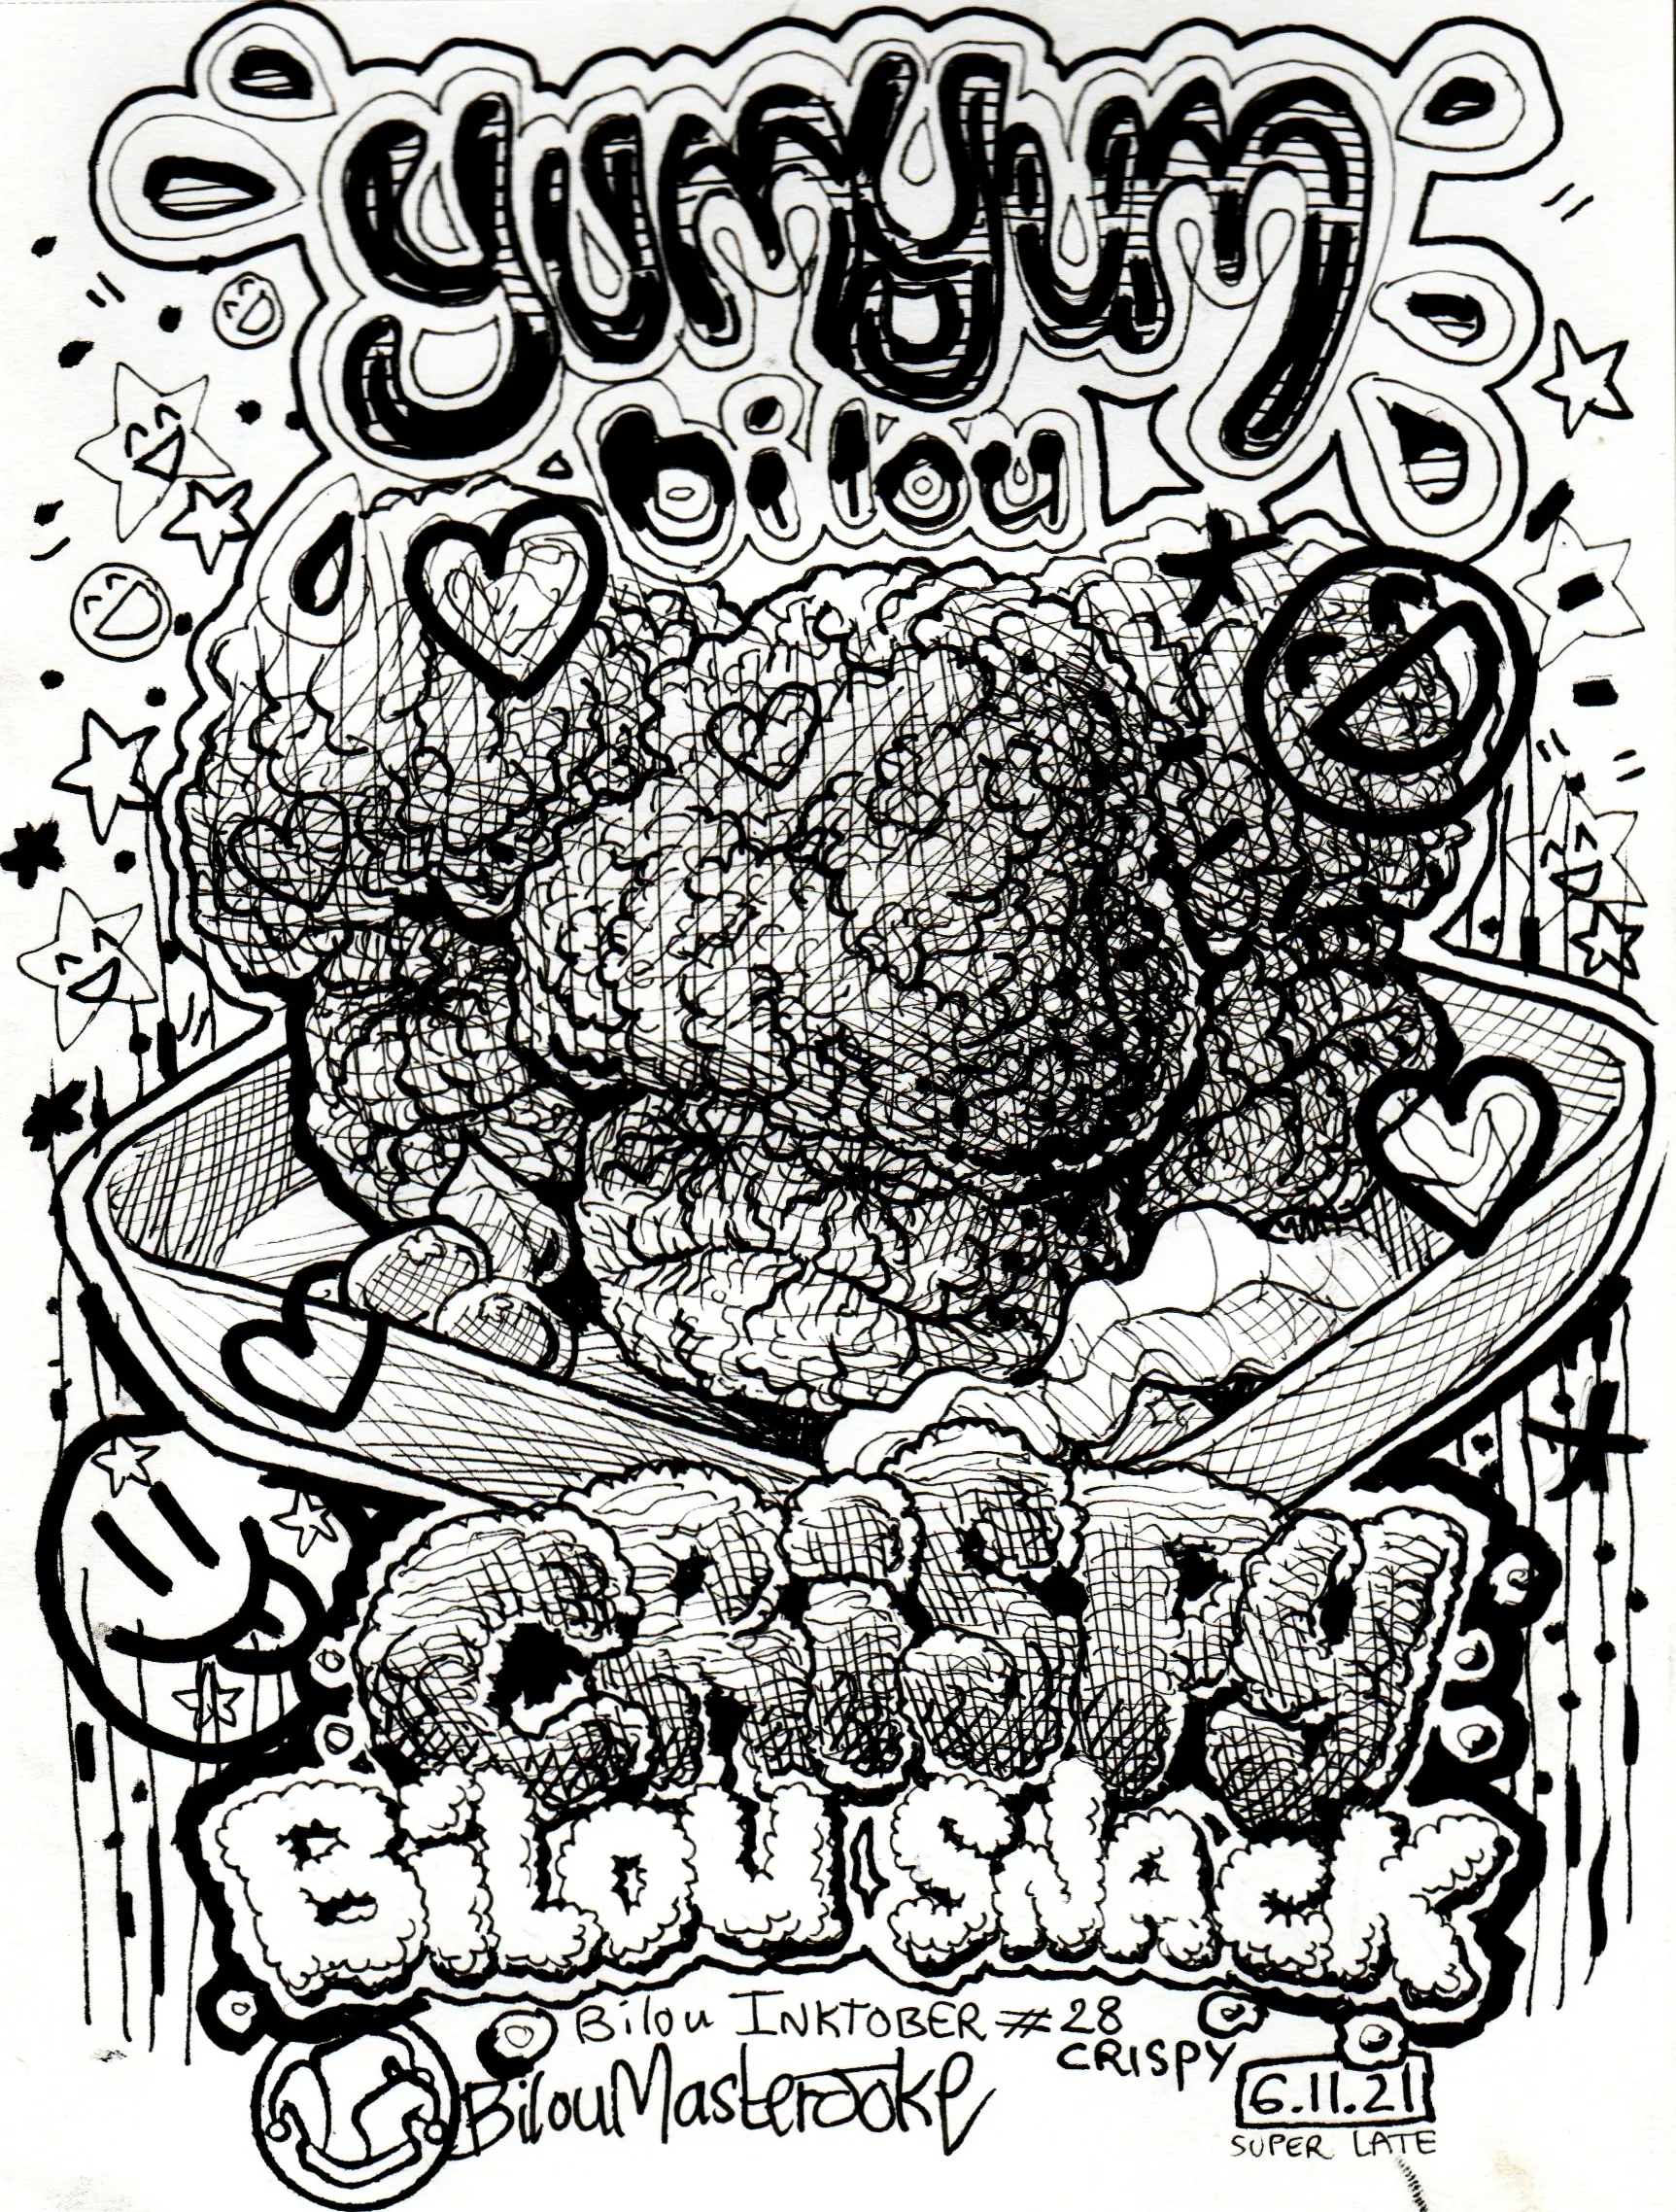 le zoli dessin « Crispy Bilou Snack » que j'ai bilouté le 6 novembre 2021